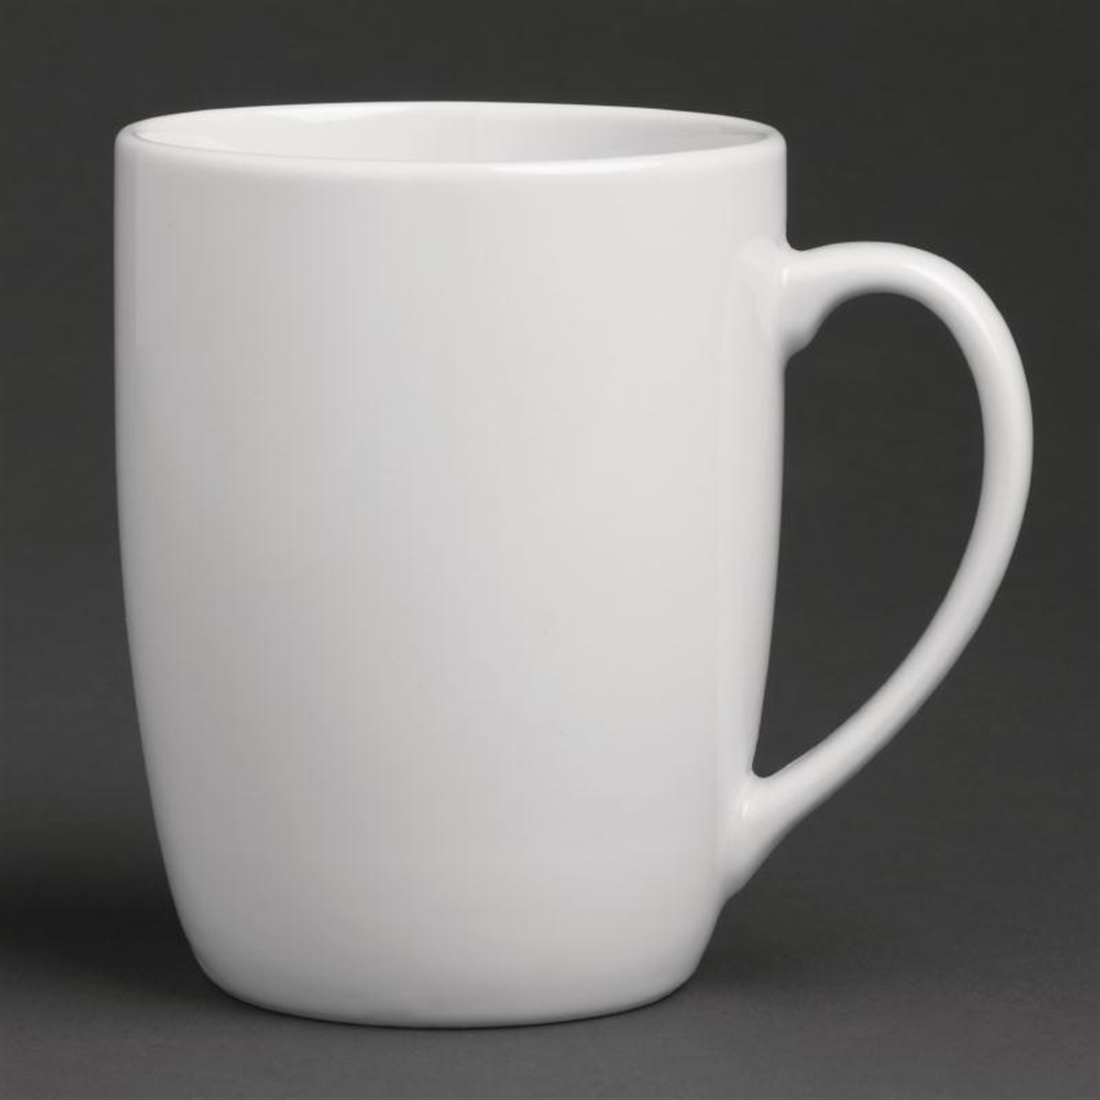 Royal Porcelain Classic White Mug 250ml